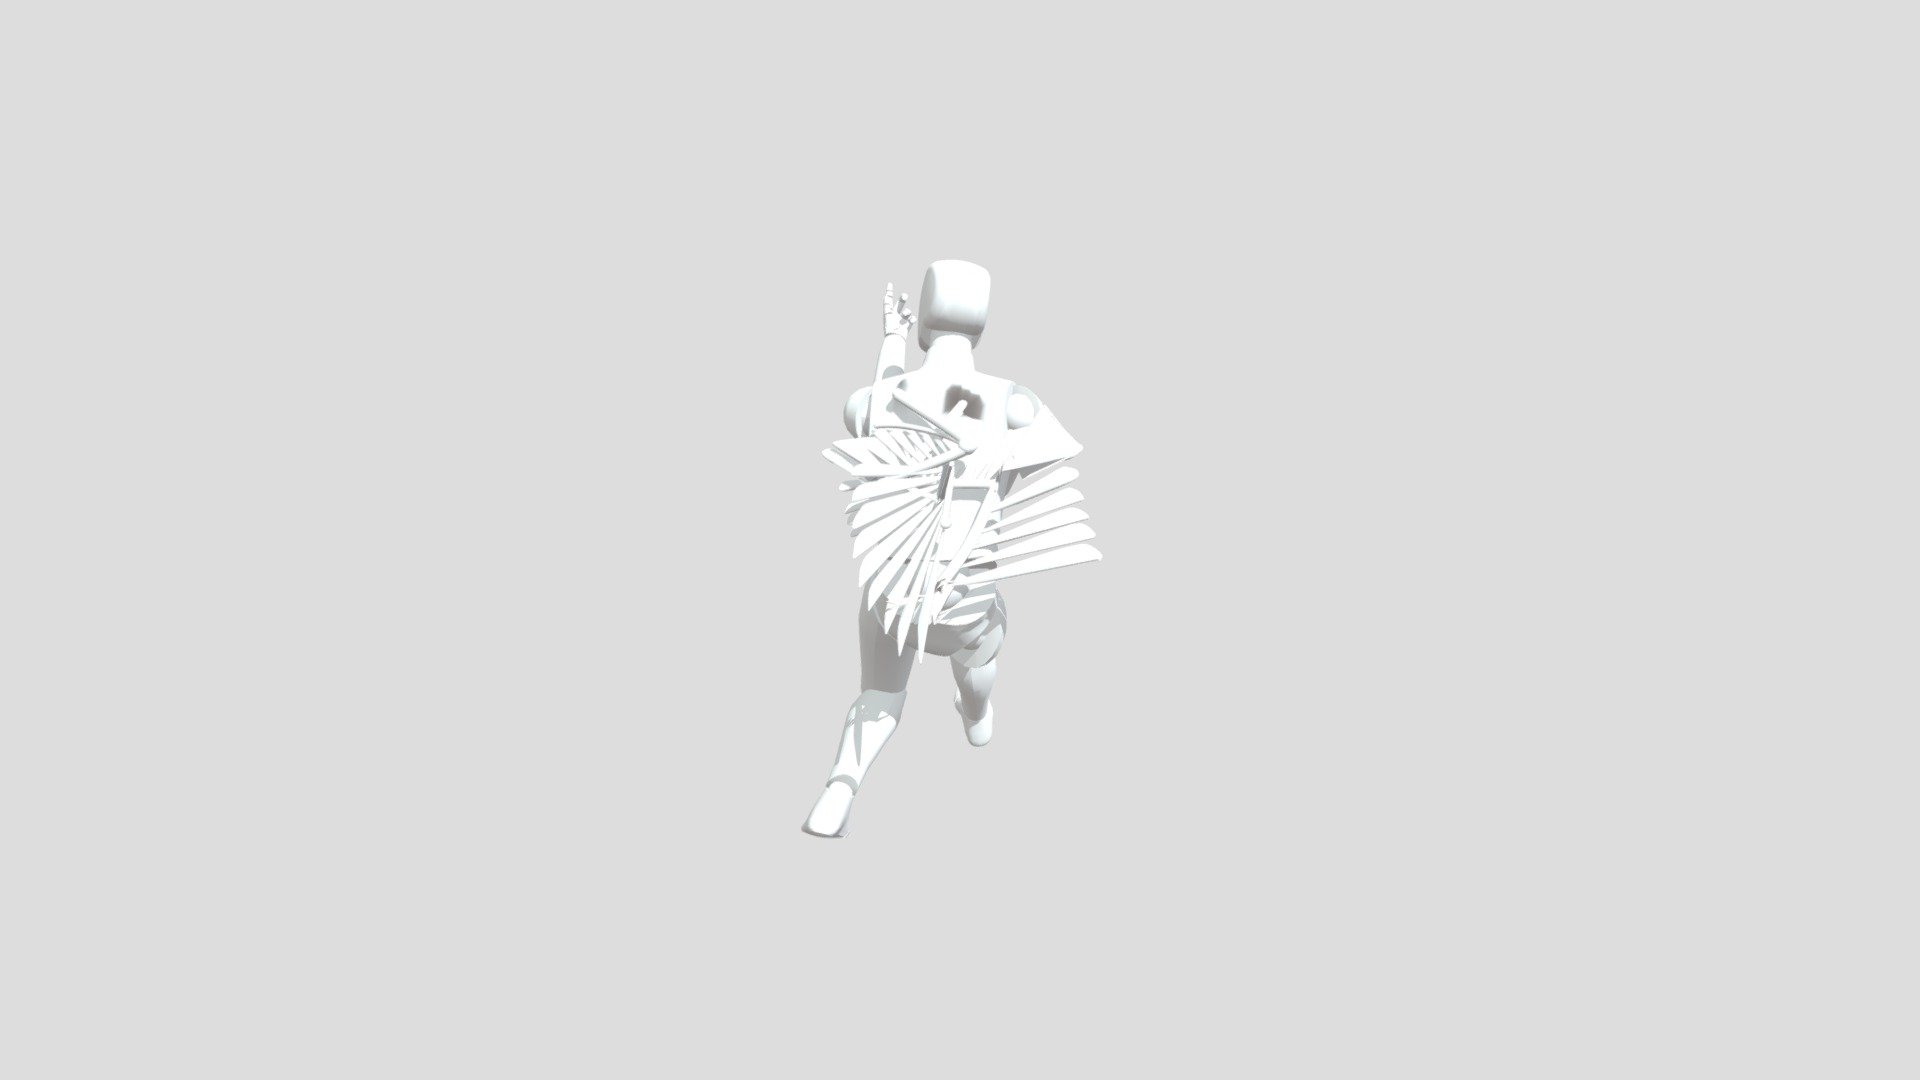 KAIRO_ALETEA - Download Free 3D model by artuarlouis [690f6fd] - Sketchfab